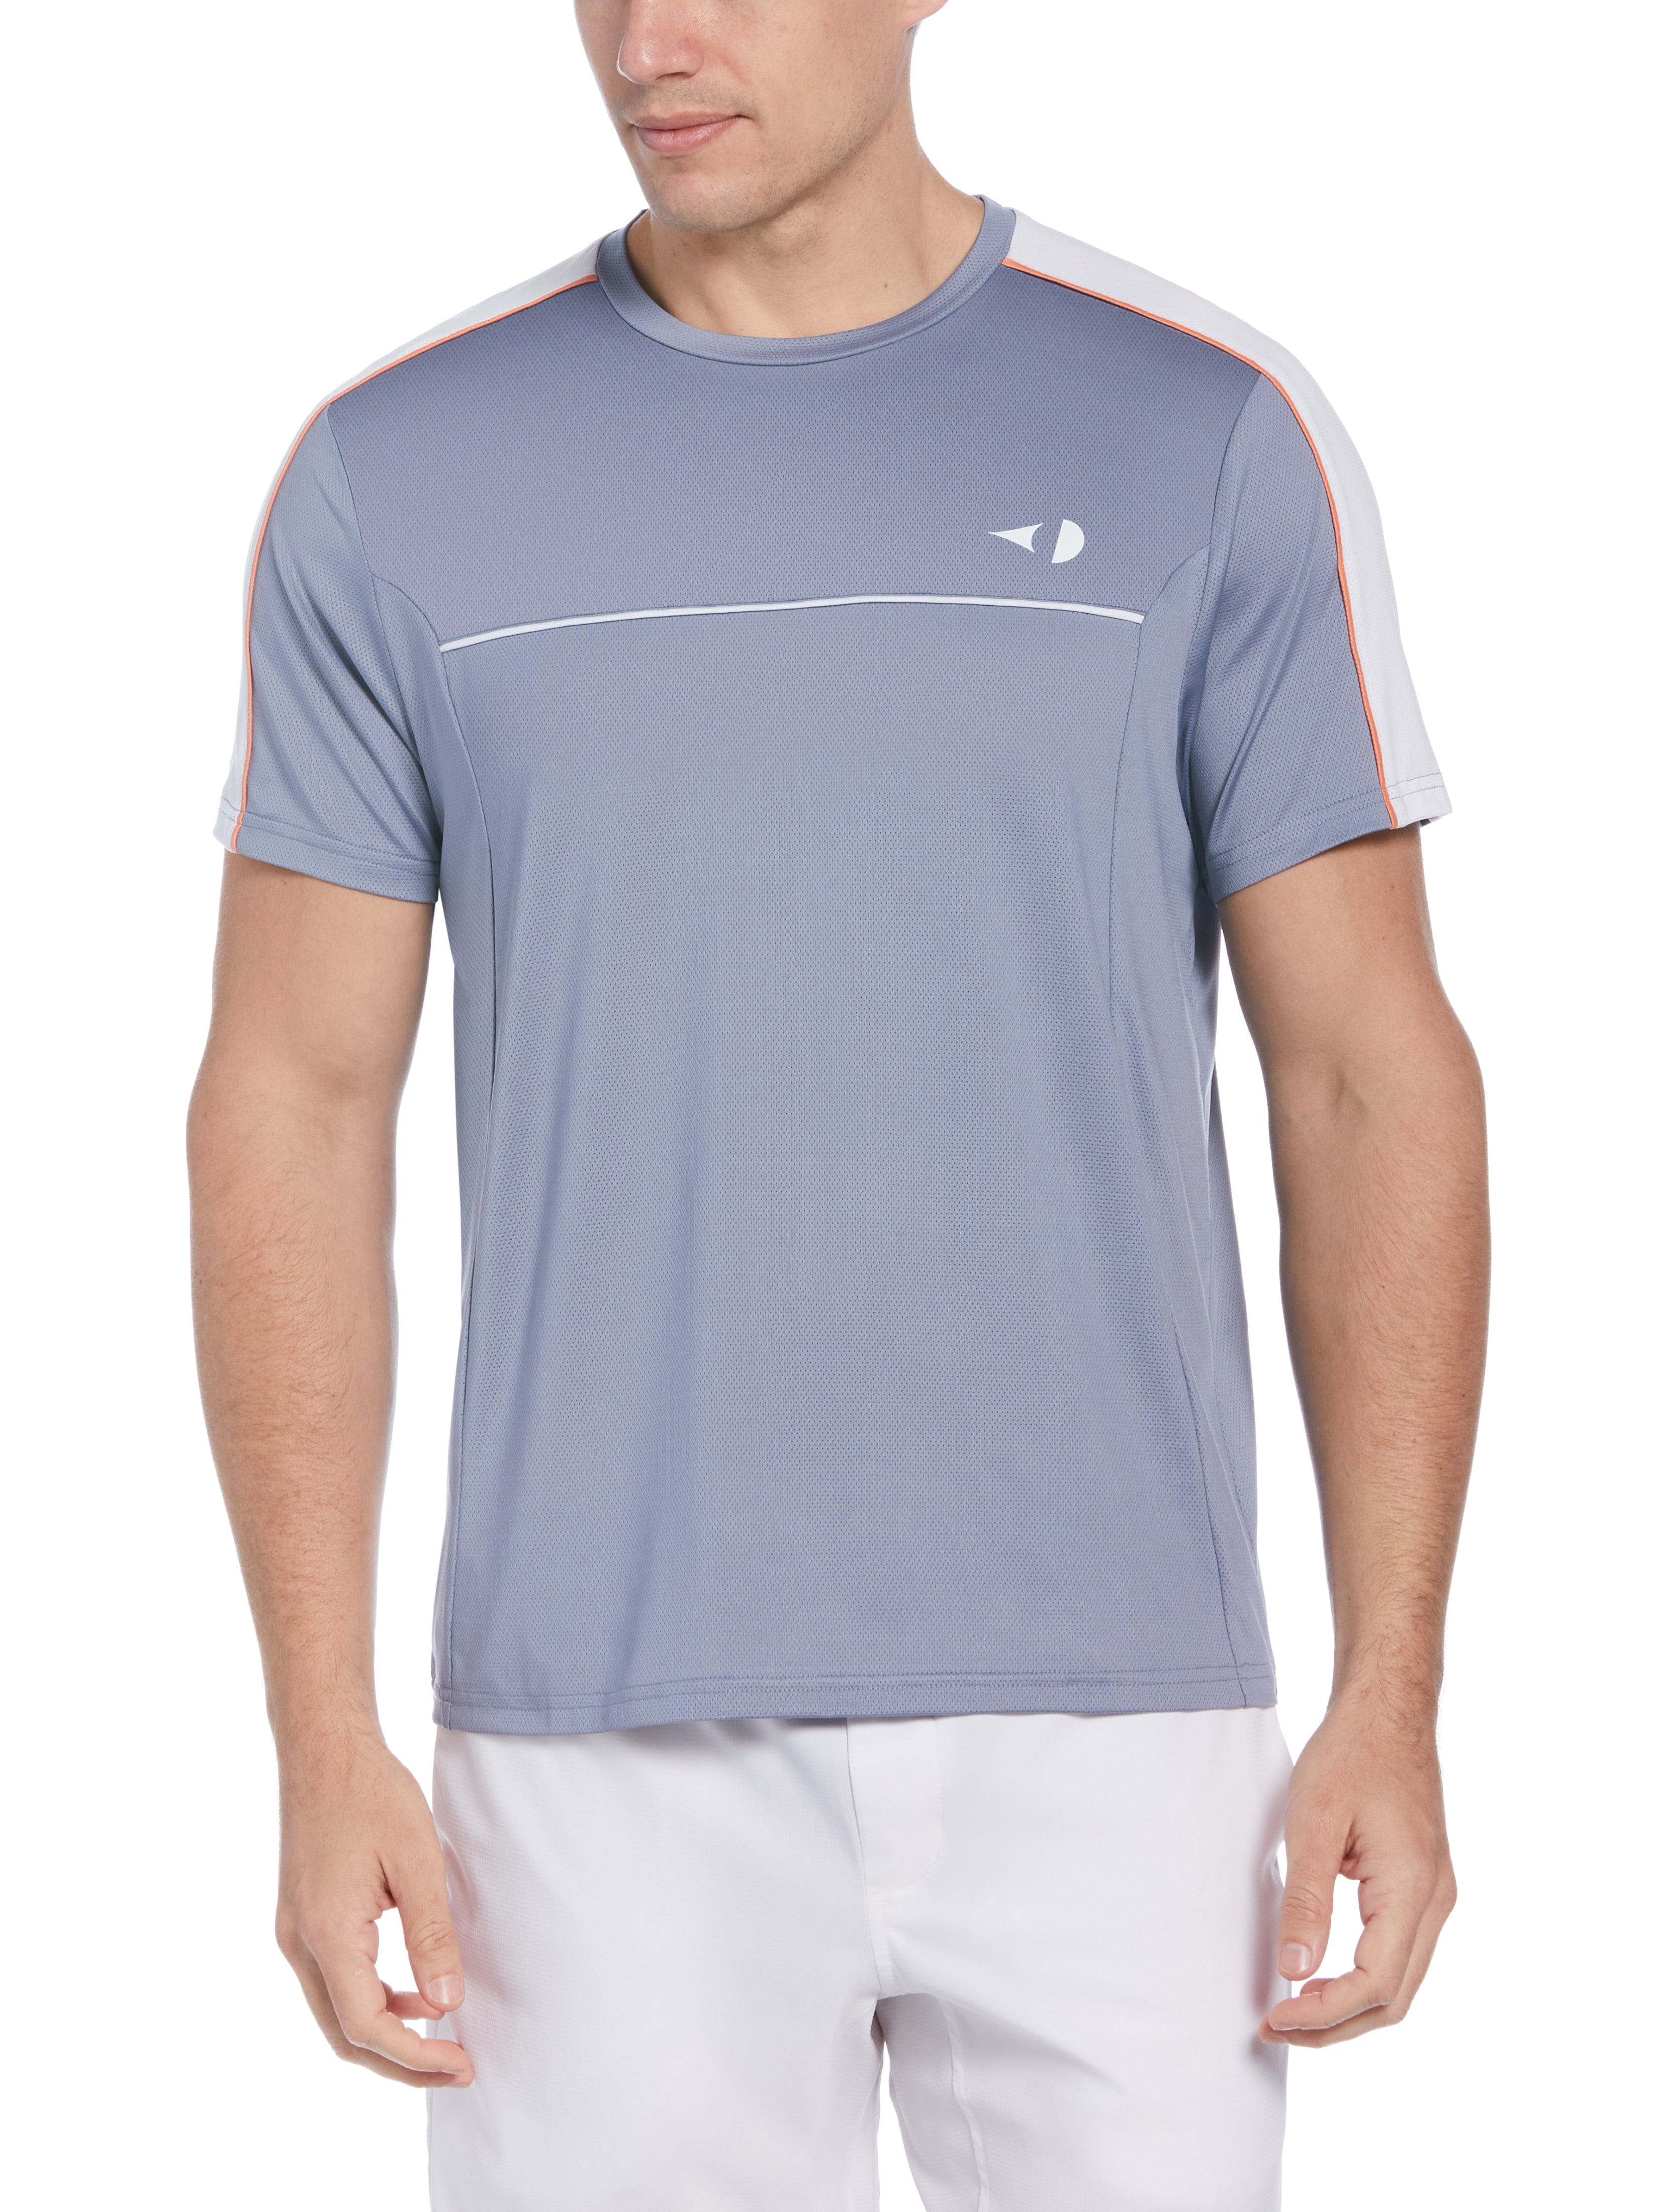 Grand Slam Mens Color Block Crew Neck Tennis Shirt w/ Piping, Size Medium, Flint Stone Gray, Polyester/Spandex | Golf Apparel Shop